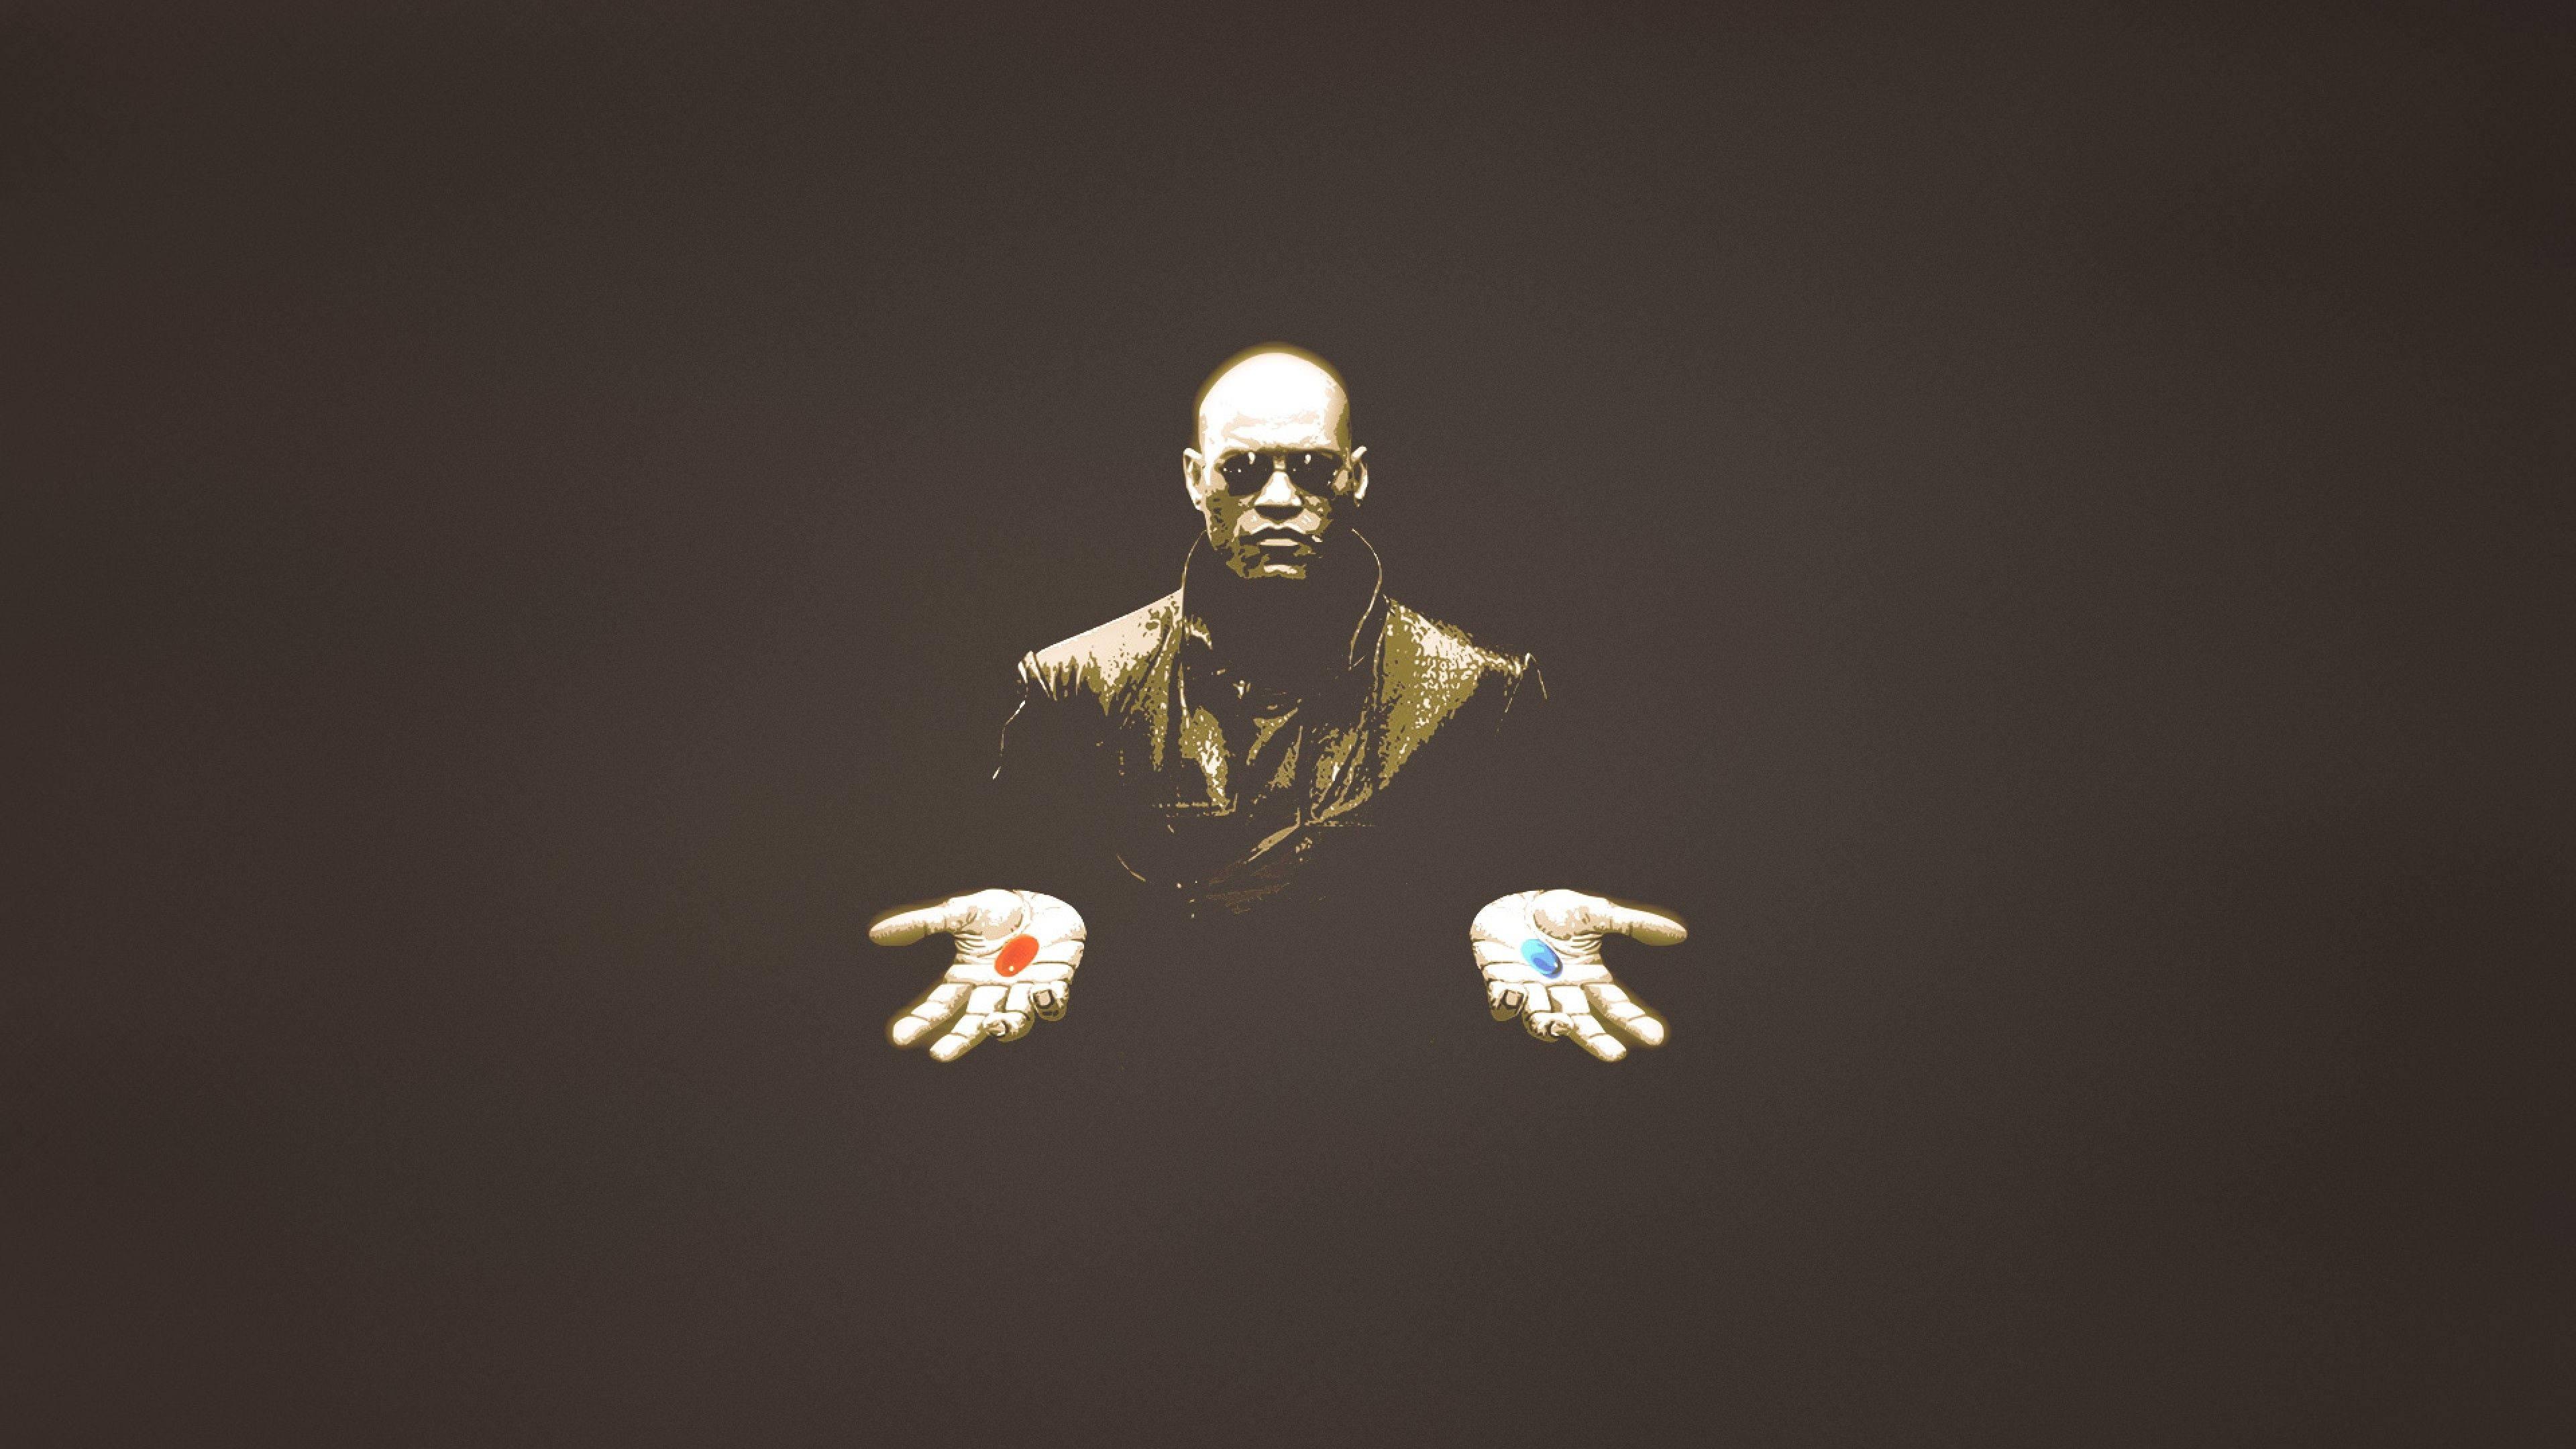 Download The Matrix Morpheus Red And Pills Wallpaper | Wallpapers.com